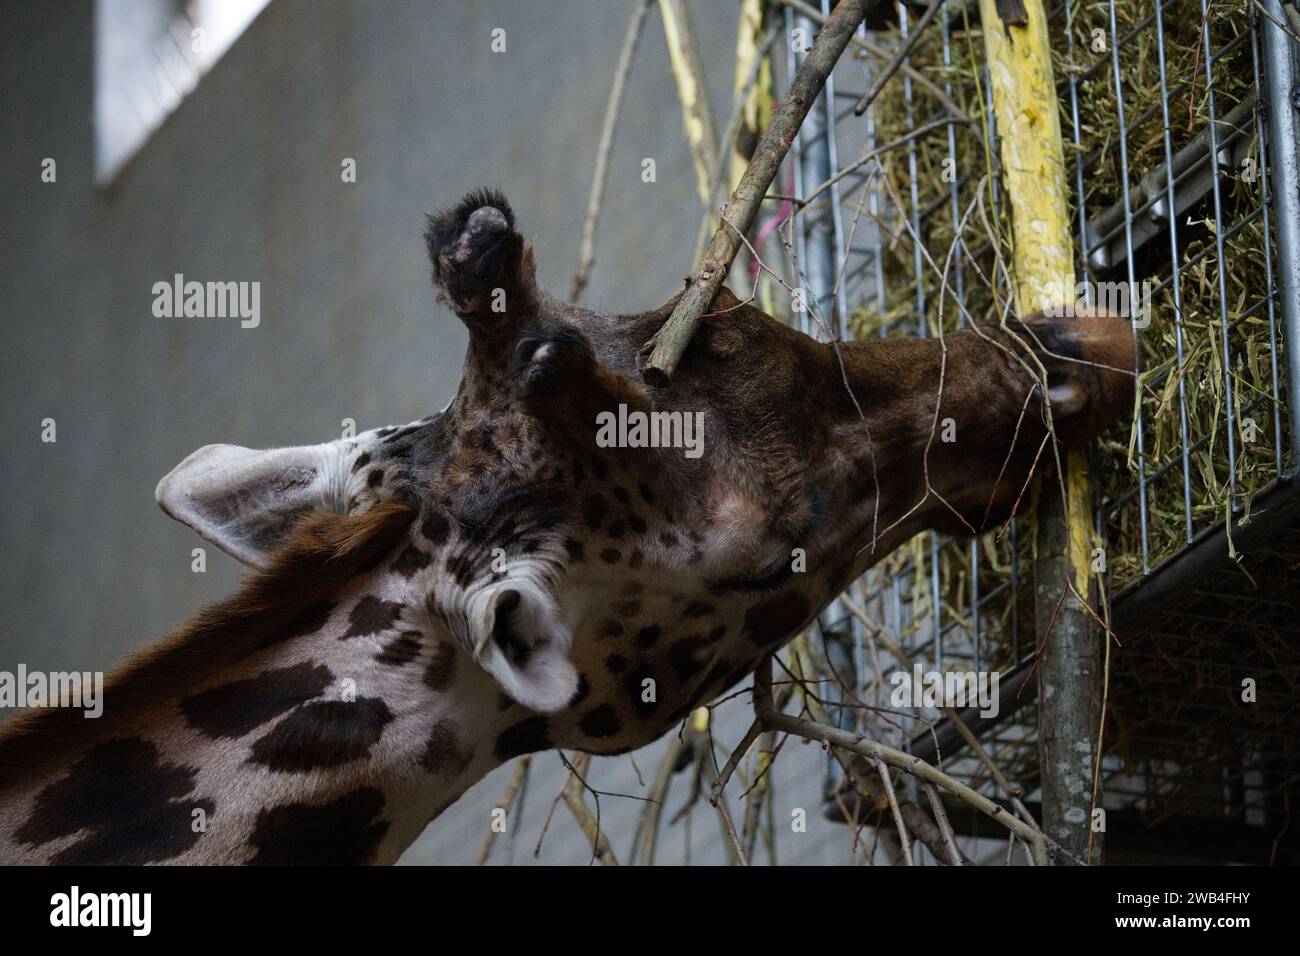 A Northern Giraffe at London Zoo Stock Photo